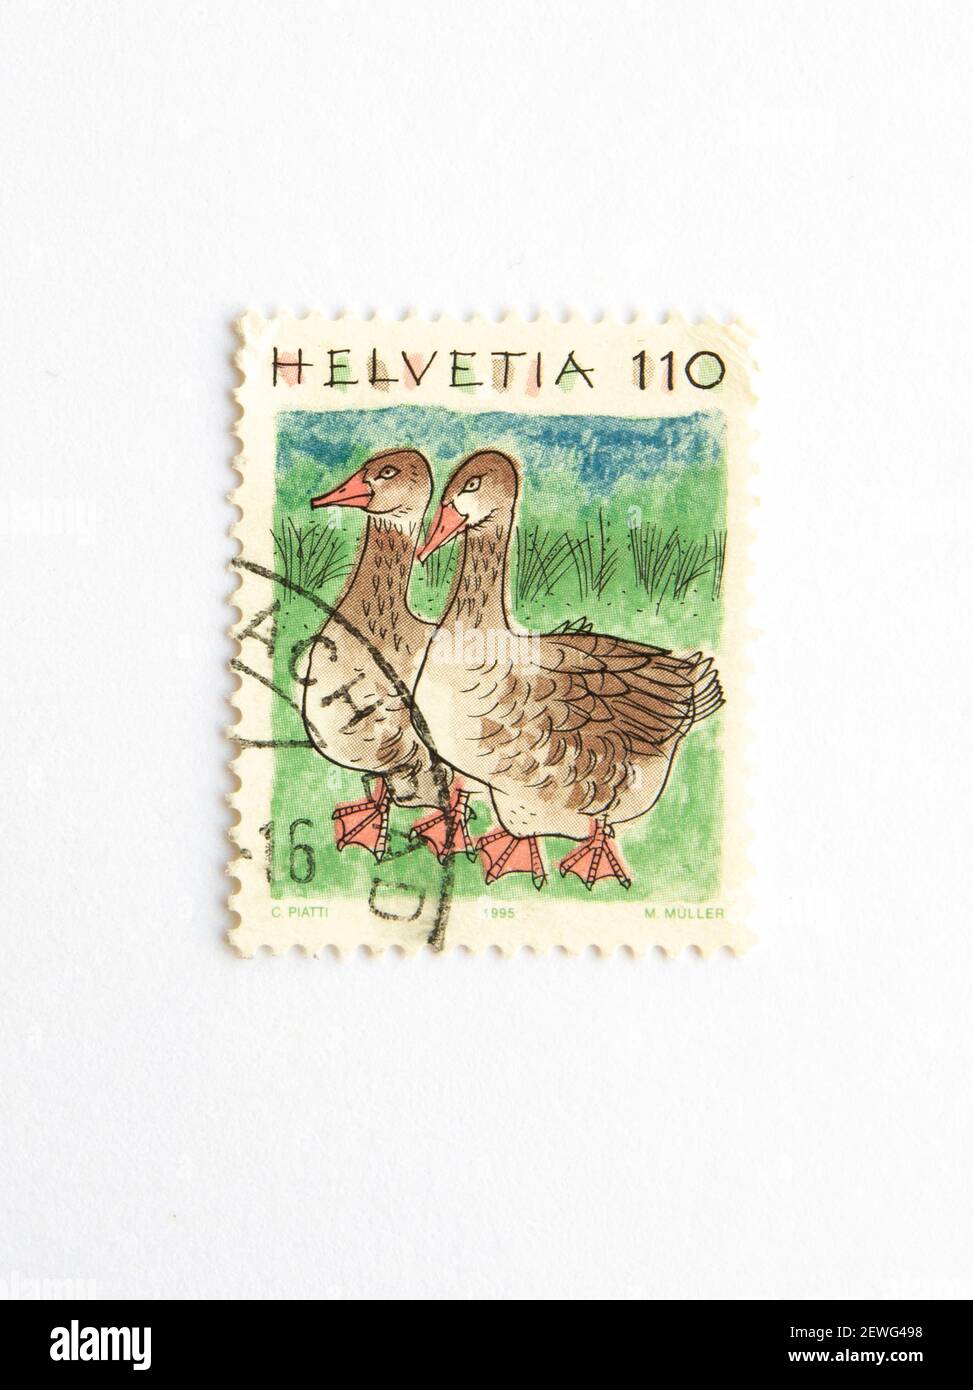 03.03.2021 İstanbul Turkey. Postage Stamp. Helvetia Celestino Piatti-- Ducks and Other Wise Creatures Stock Photo